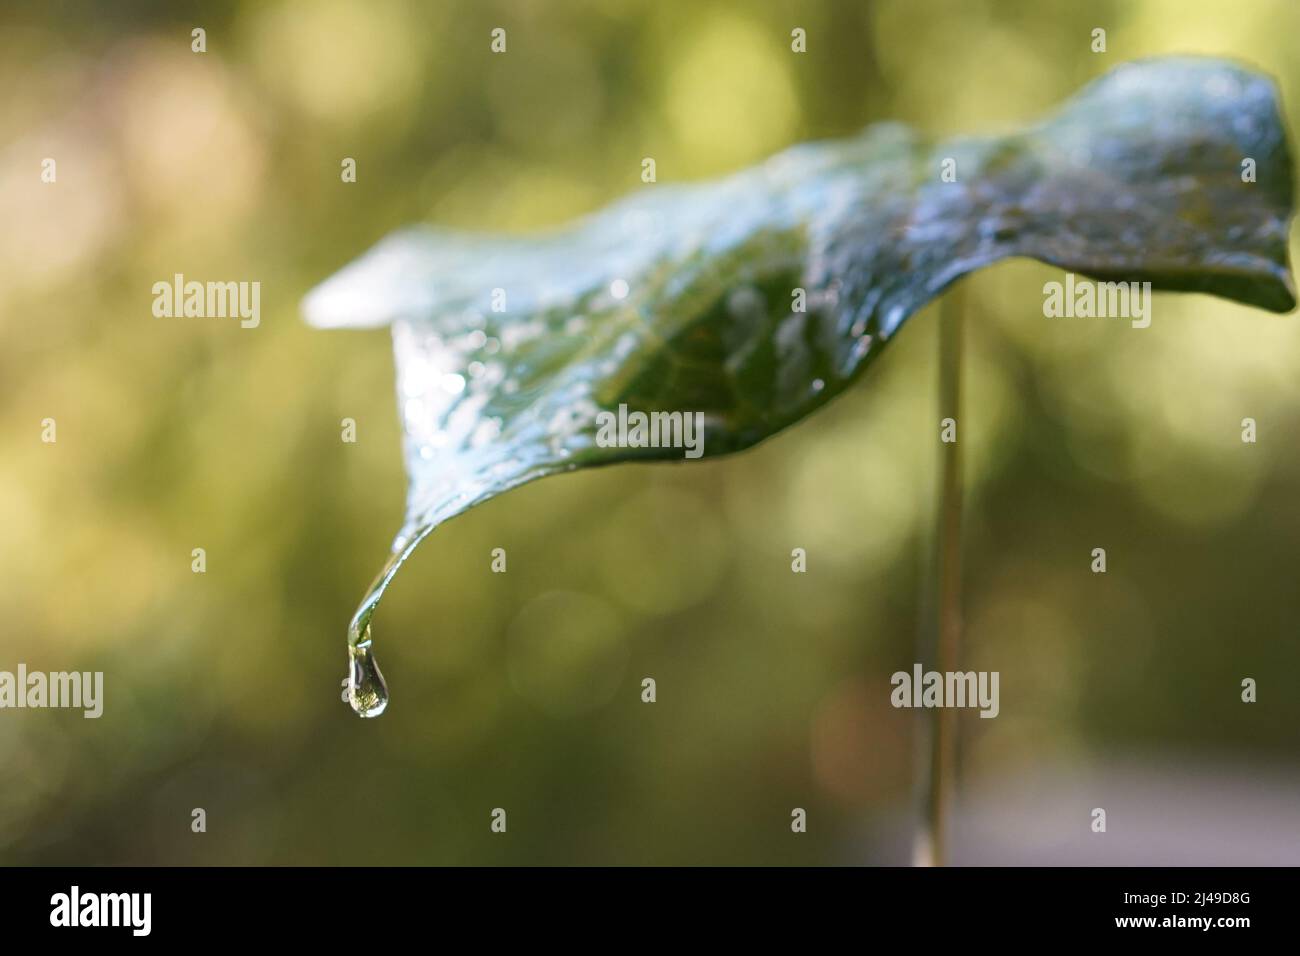 Raindrops falling onto a green leaf Stock Photo